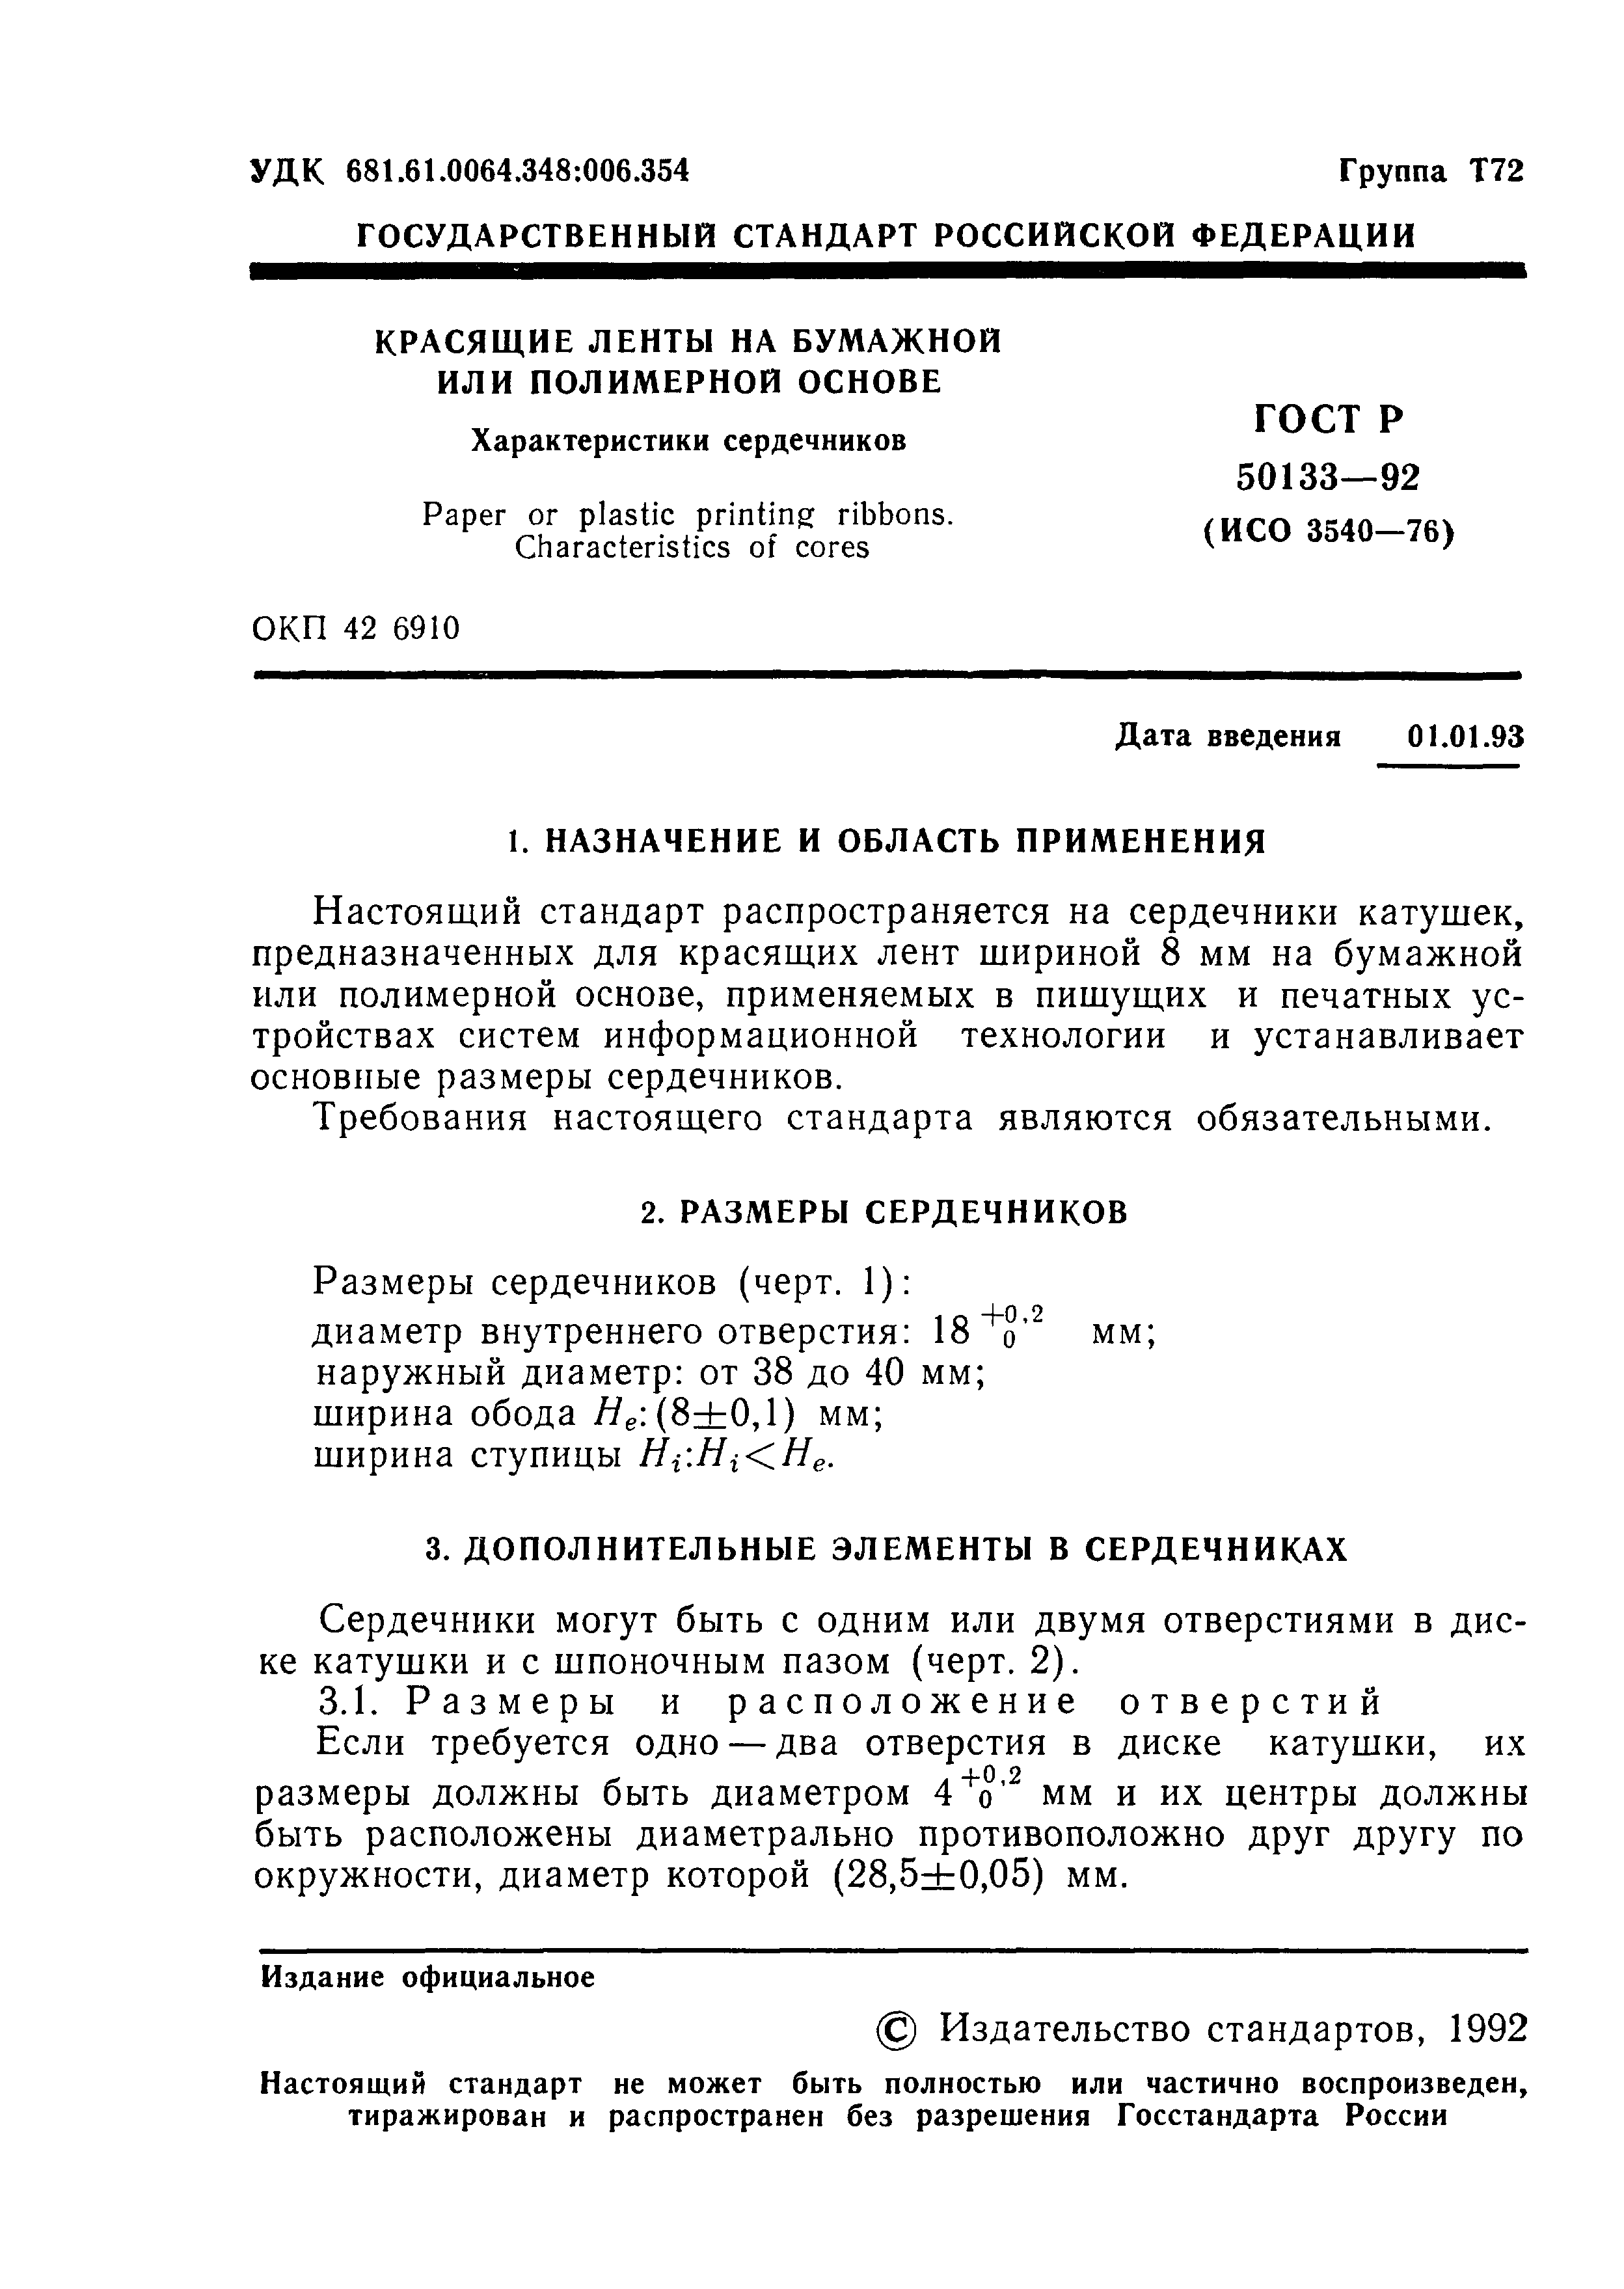 ГОСТ Р 50133-92